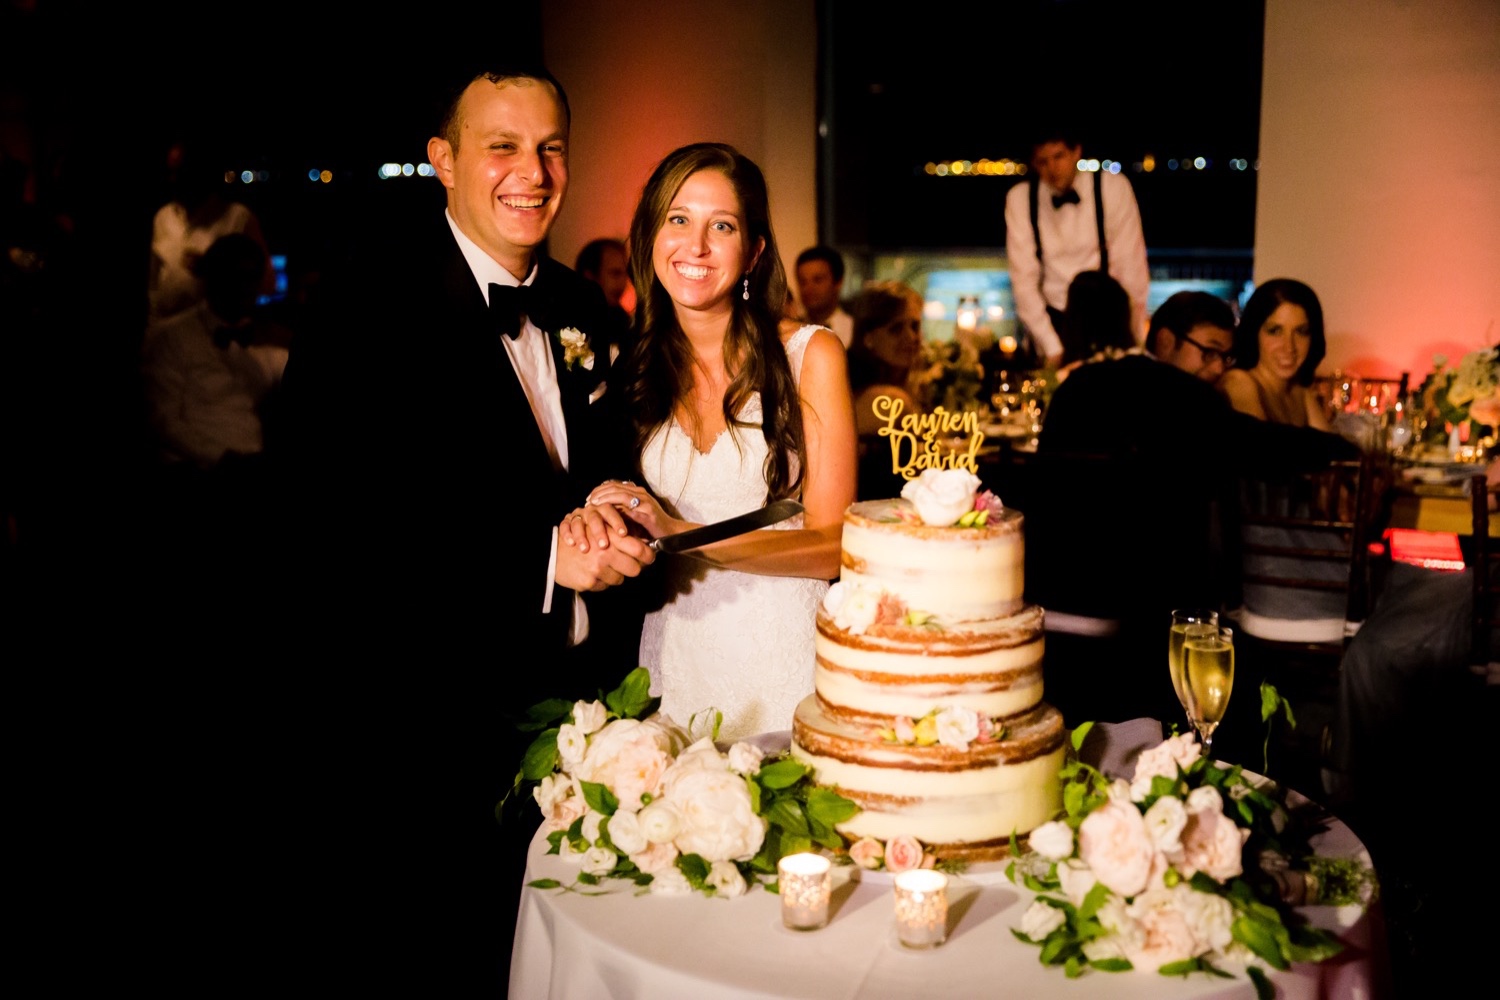 A newly wedded couple cutting their wedding cake during a wedding reception at Liberty Warehouse, Brooklyn New York. 